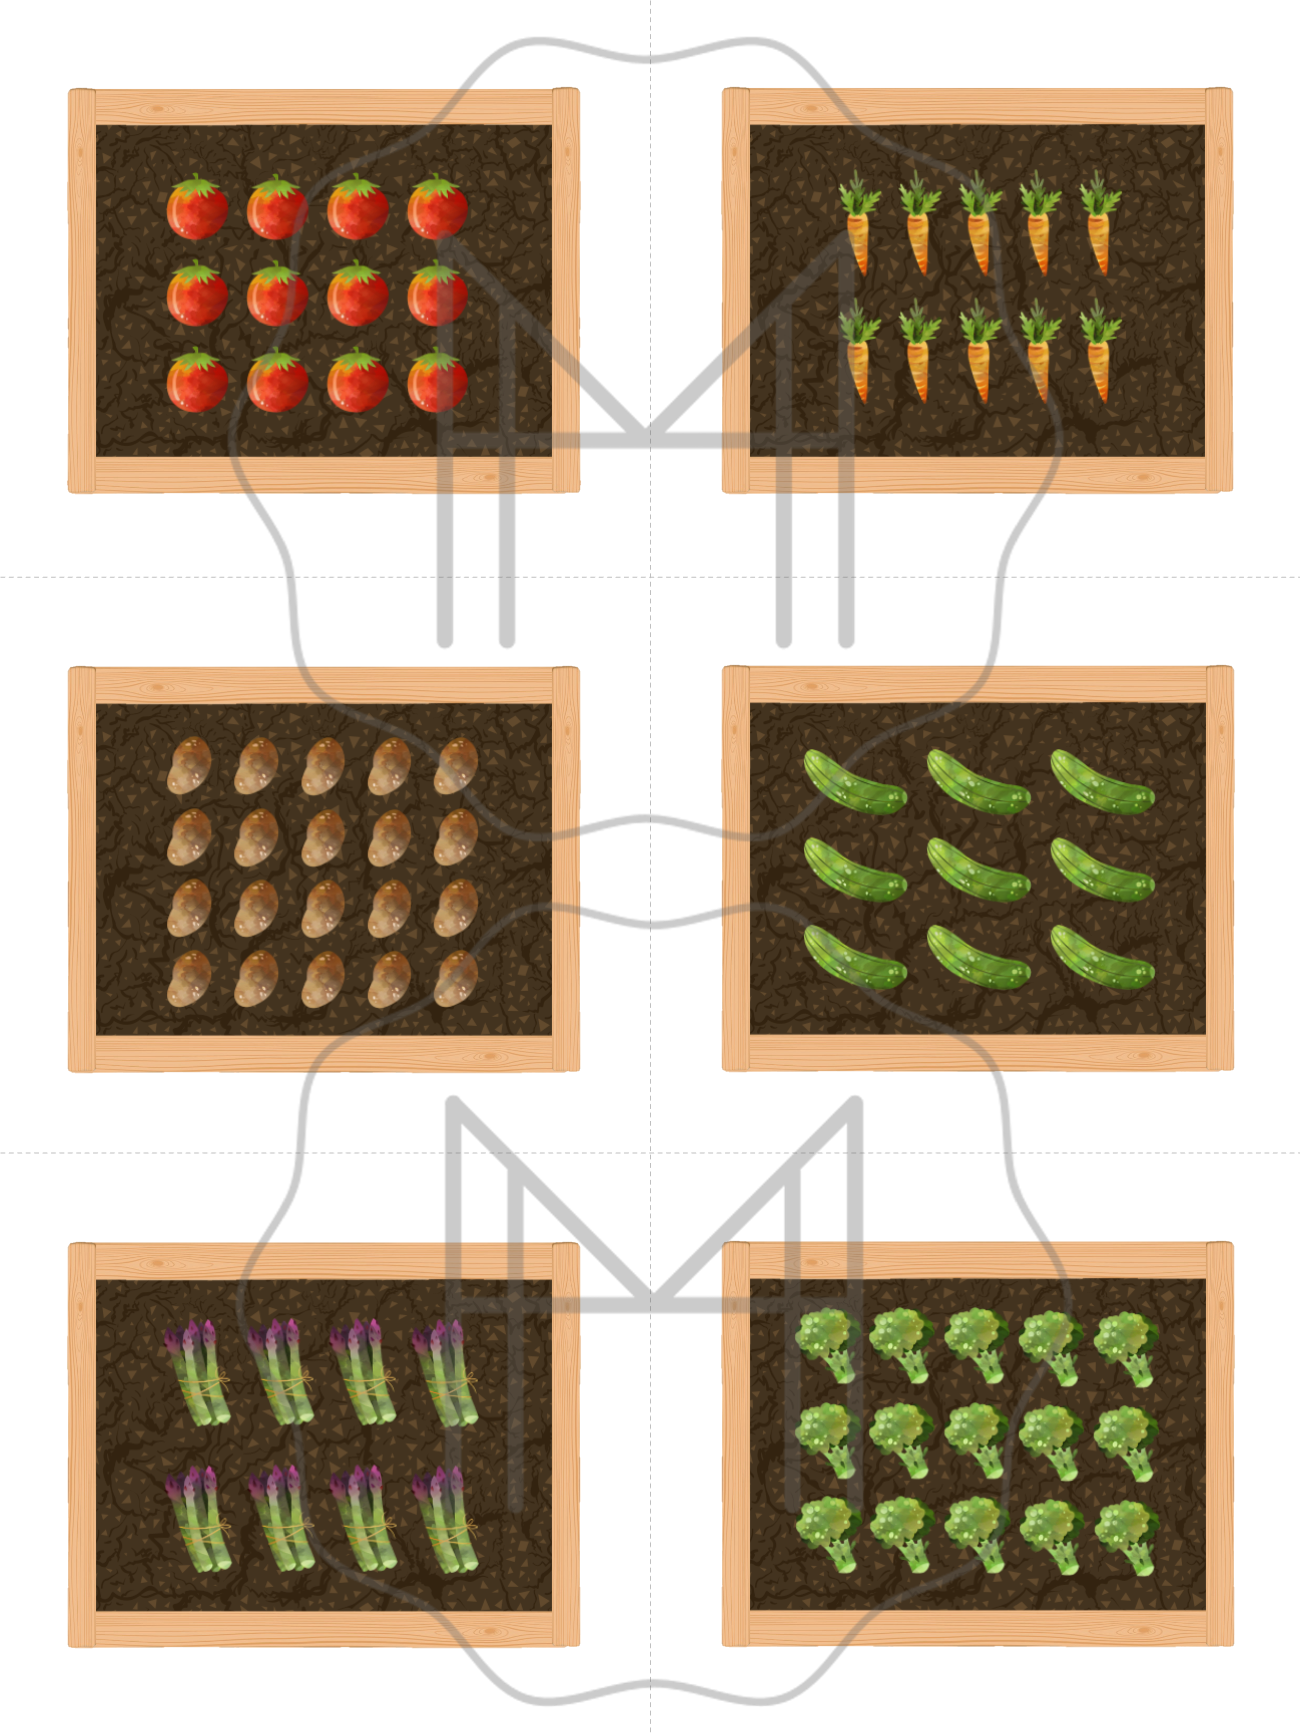 Multiplication Array Practice Cards - Designing Garden Beds